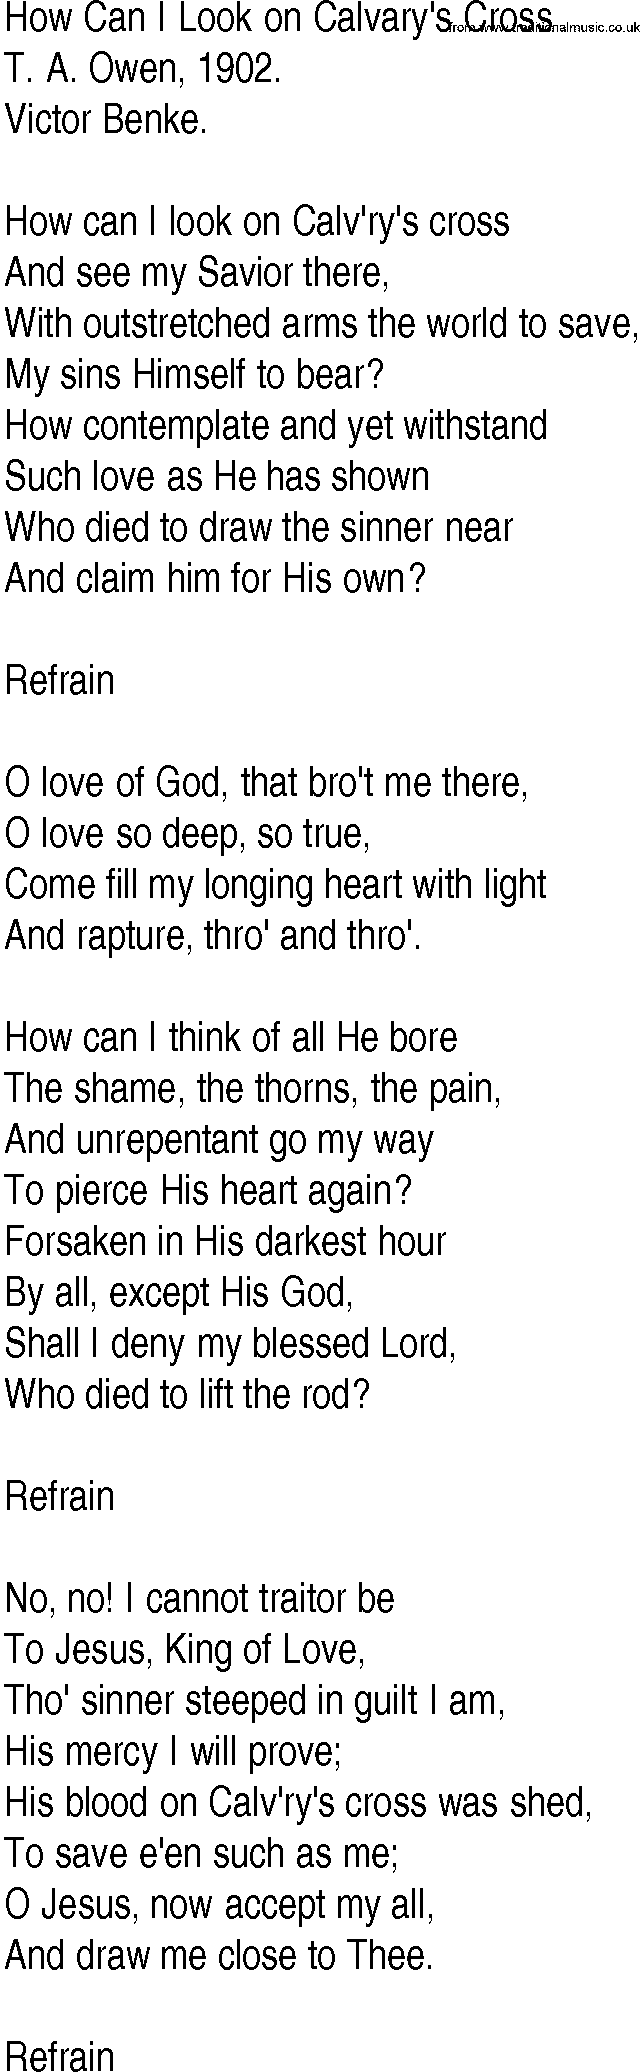 Hymn and Gospel Song: How Can I Look on Calvary's Cross by T A Owen lyrics